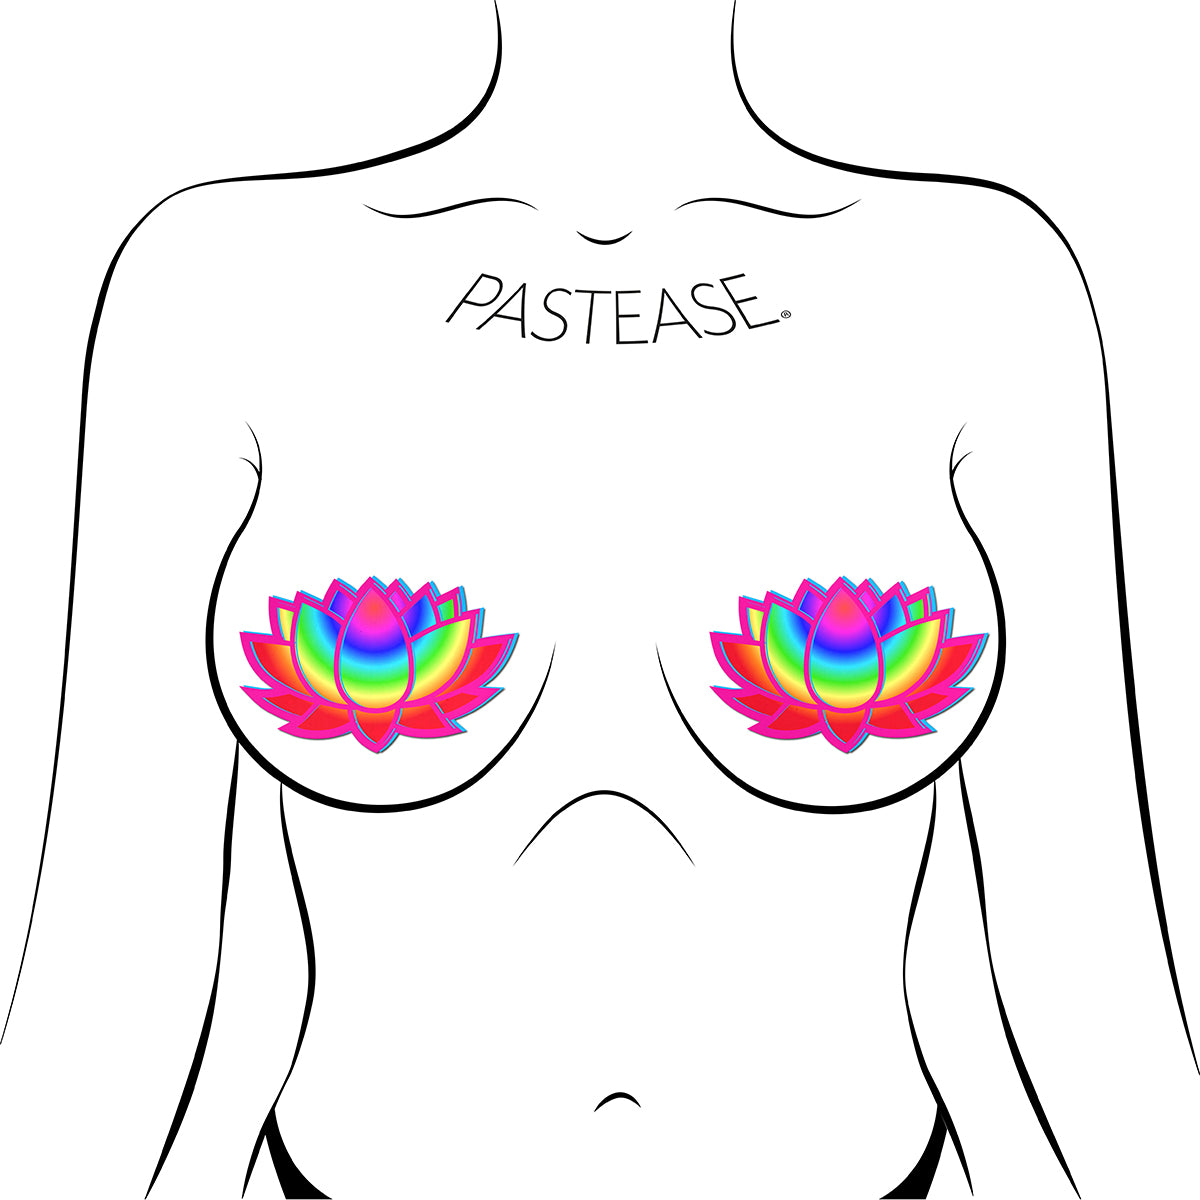 Pastease Acid Rainbow Lotus Intimates Adult Boutique